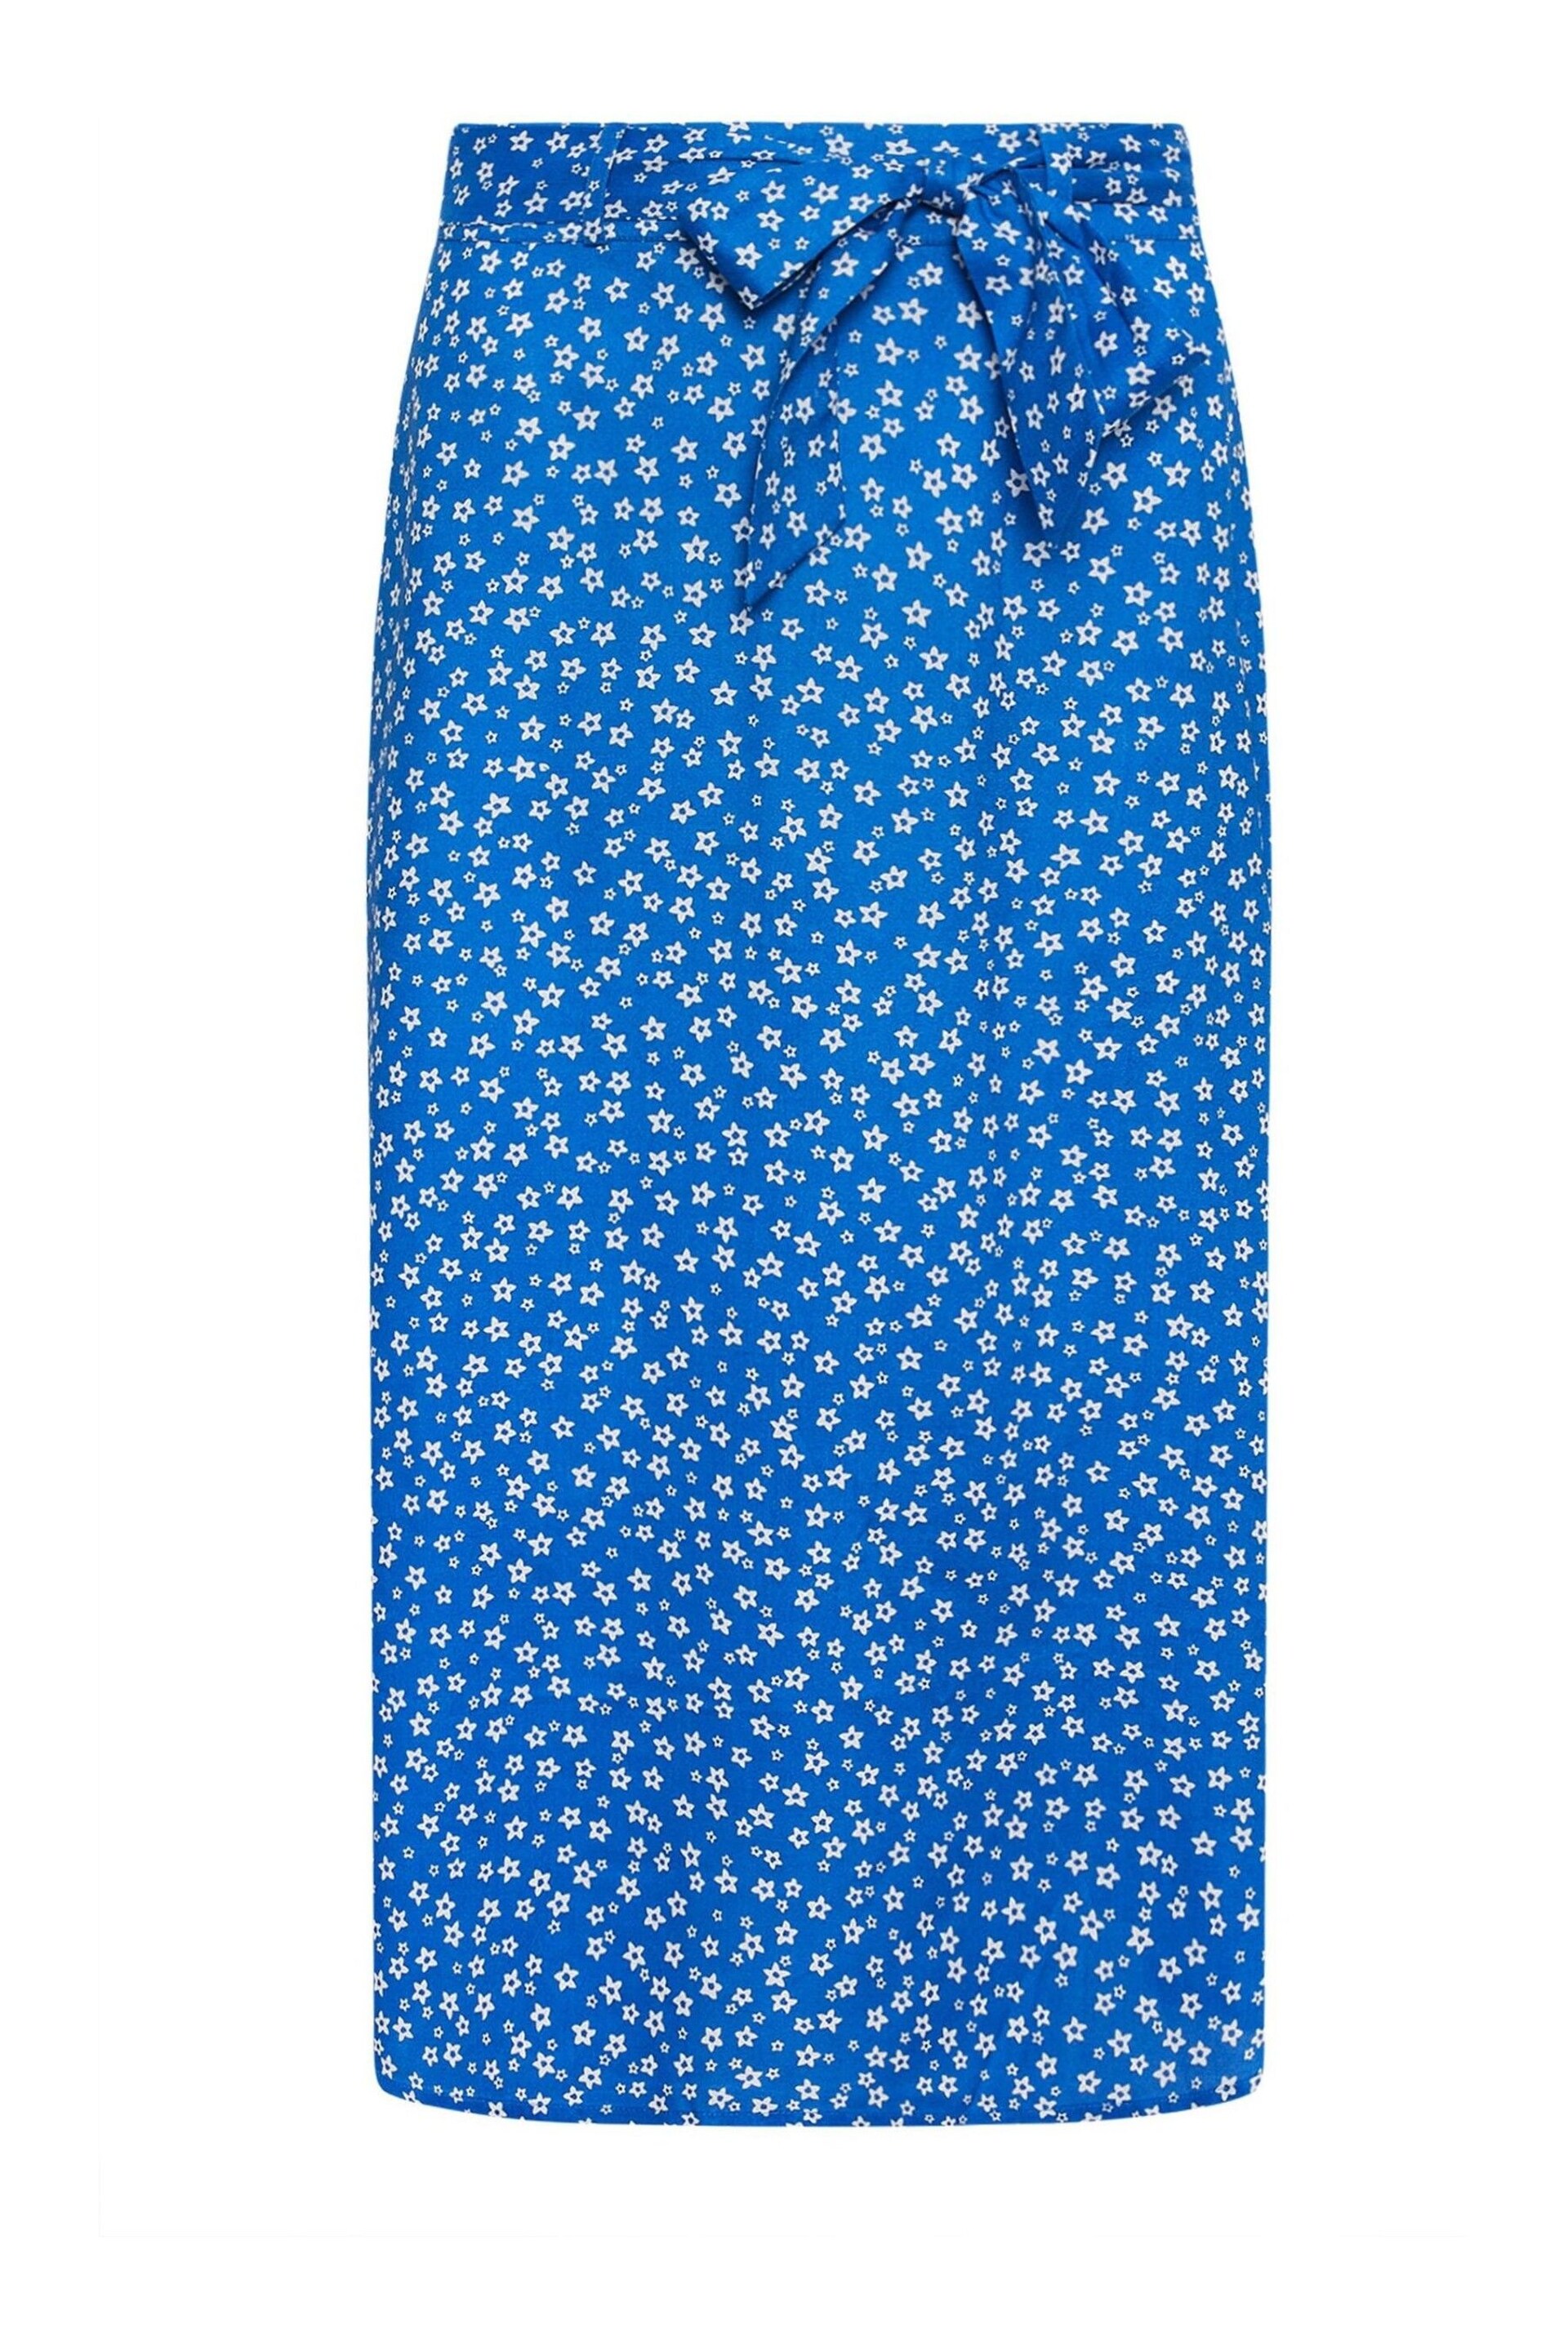 PixieGirl Petite Blue Blue Ditsy Floral Print Midi Skirt - Image 5 of 5